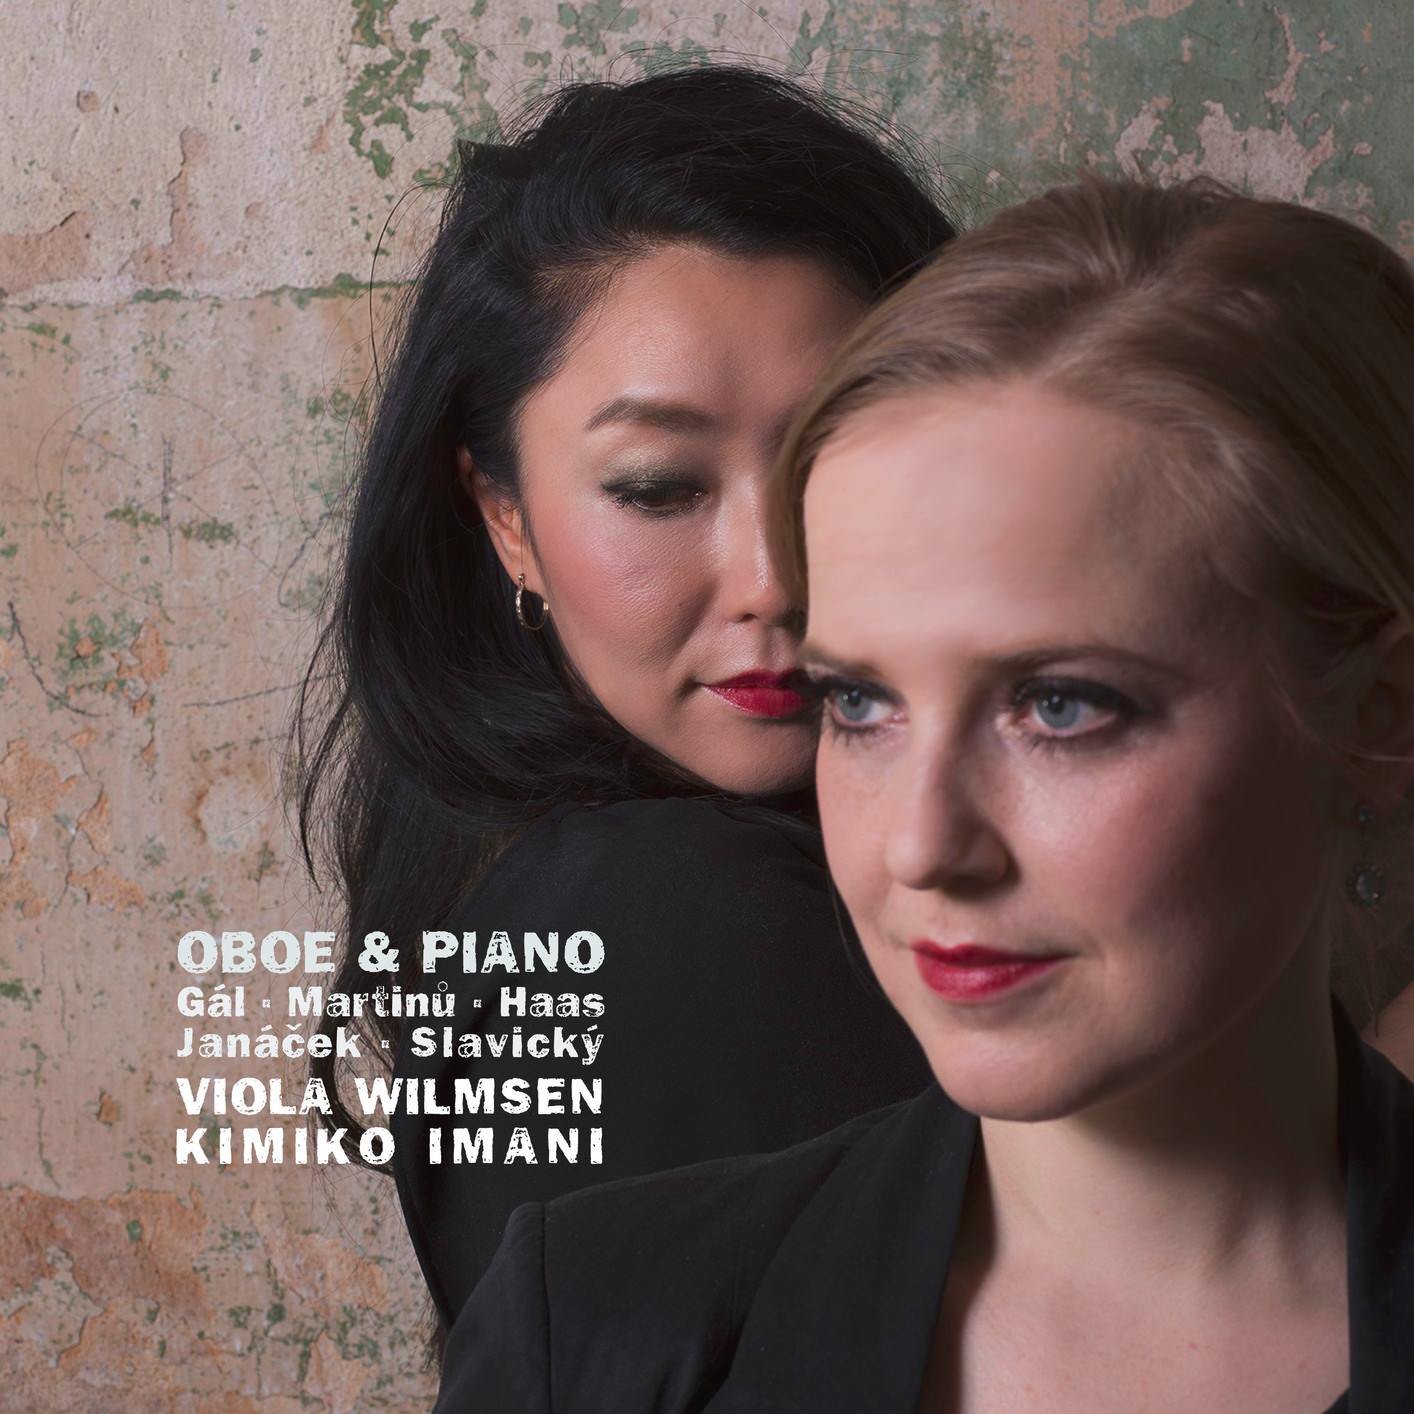 Viola Wilmsen & Kimiko Imani - Gal, Martinu, Haas, Janacek & Slavicky: Oboe & Piano (2017) [Qobuz FLAC 24bit/48kHz]